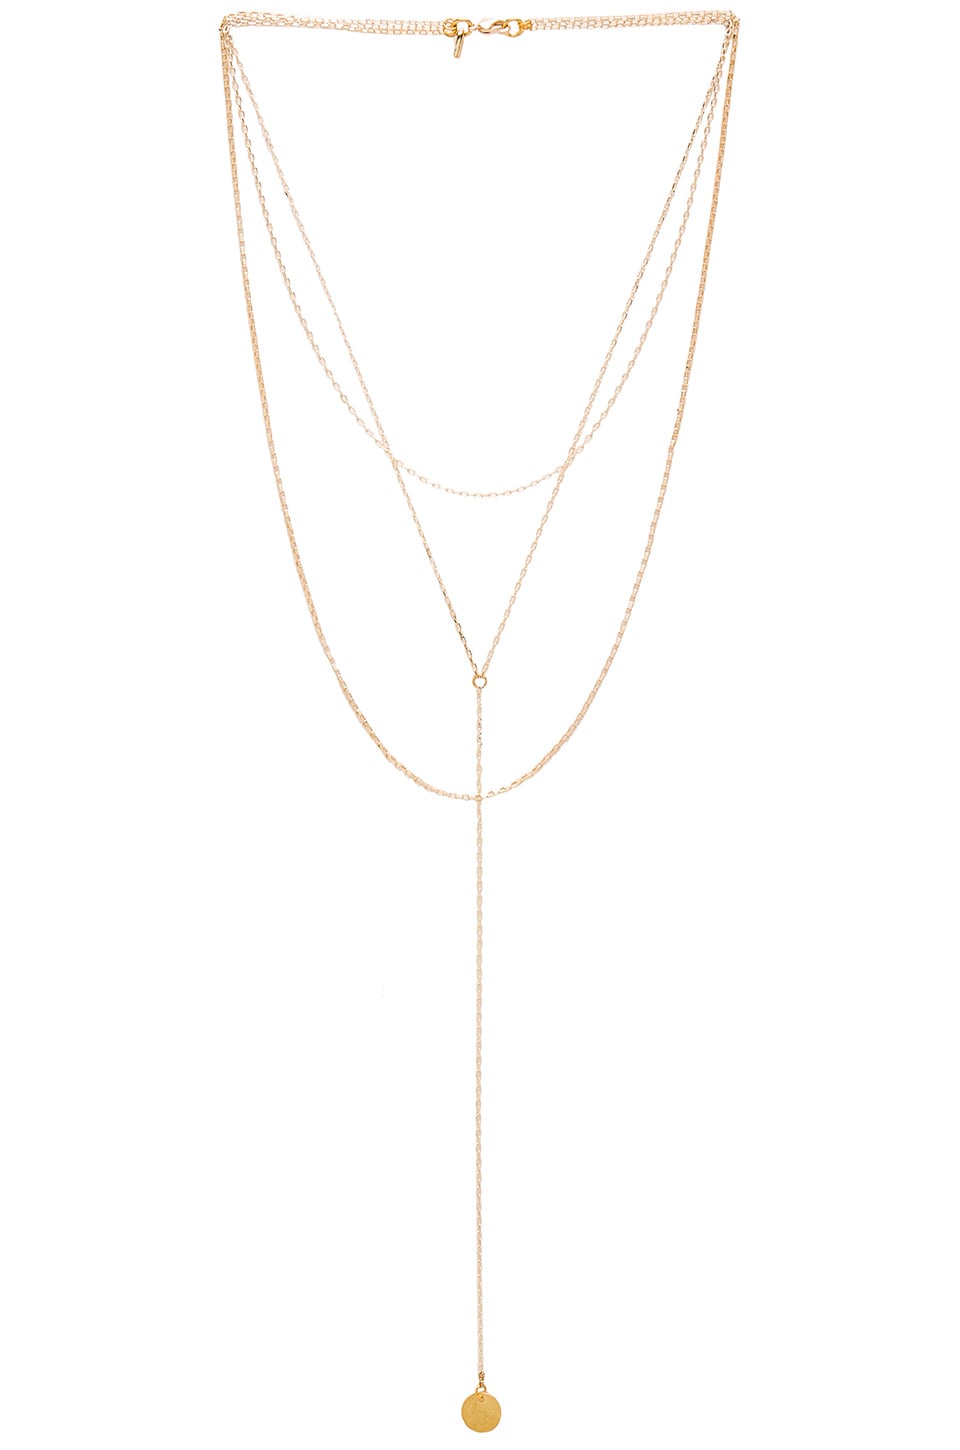 Vanessa Mooney x REVOLVE 3 Layered Necklace in Gold | REVOLVE